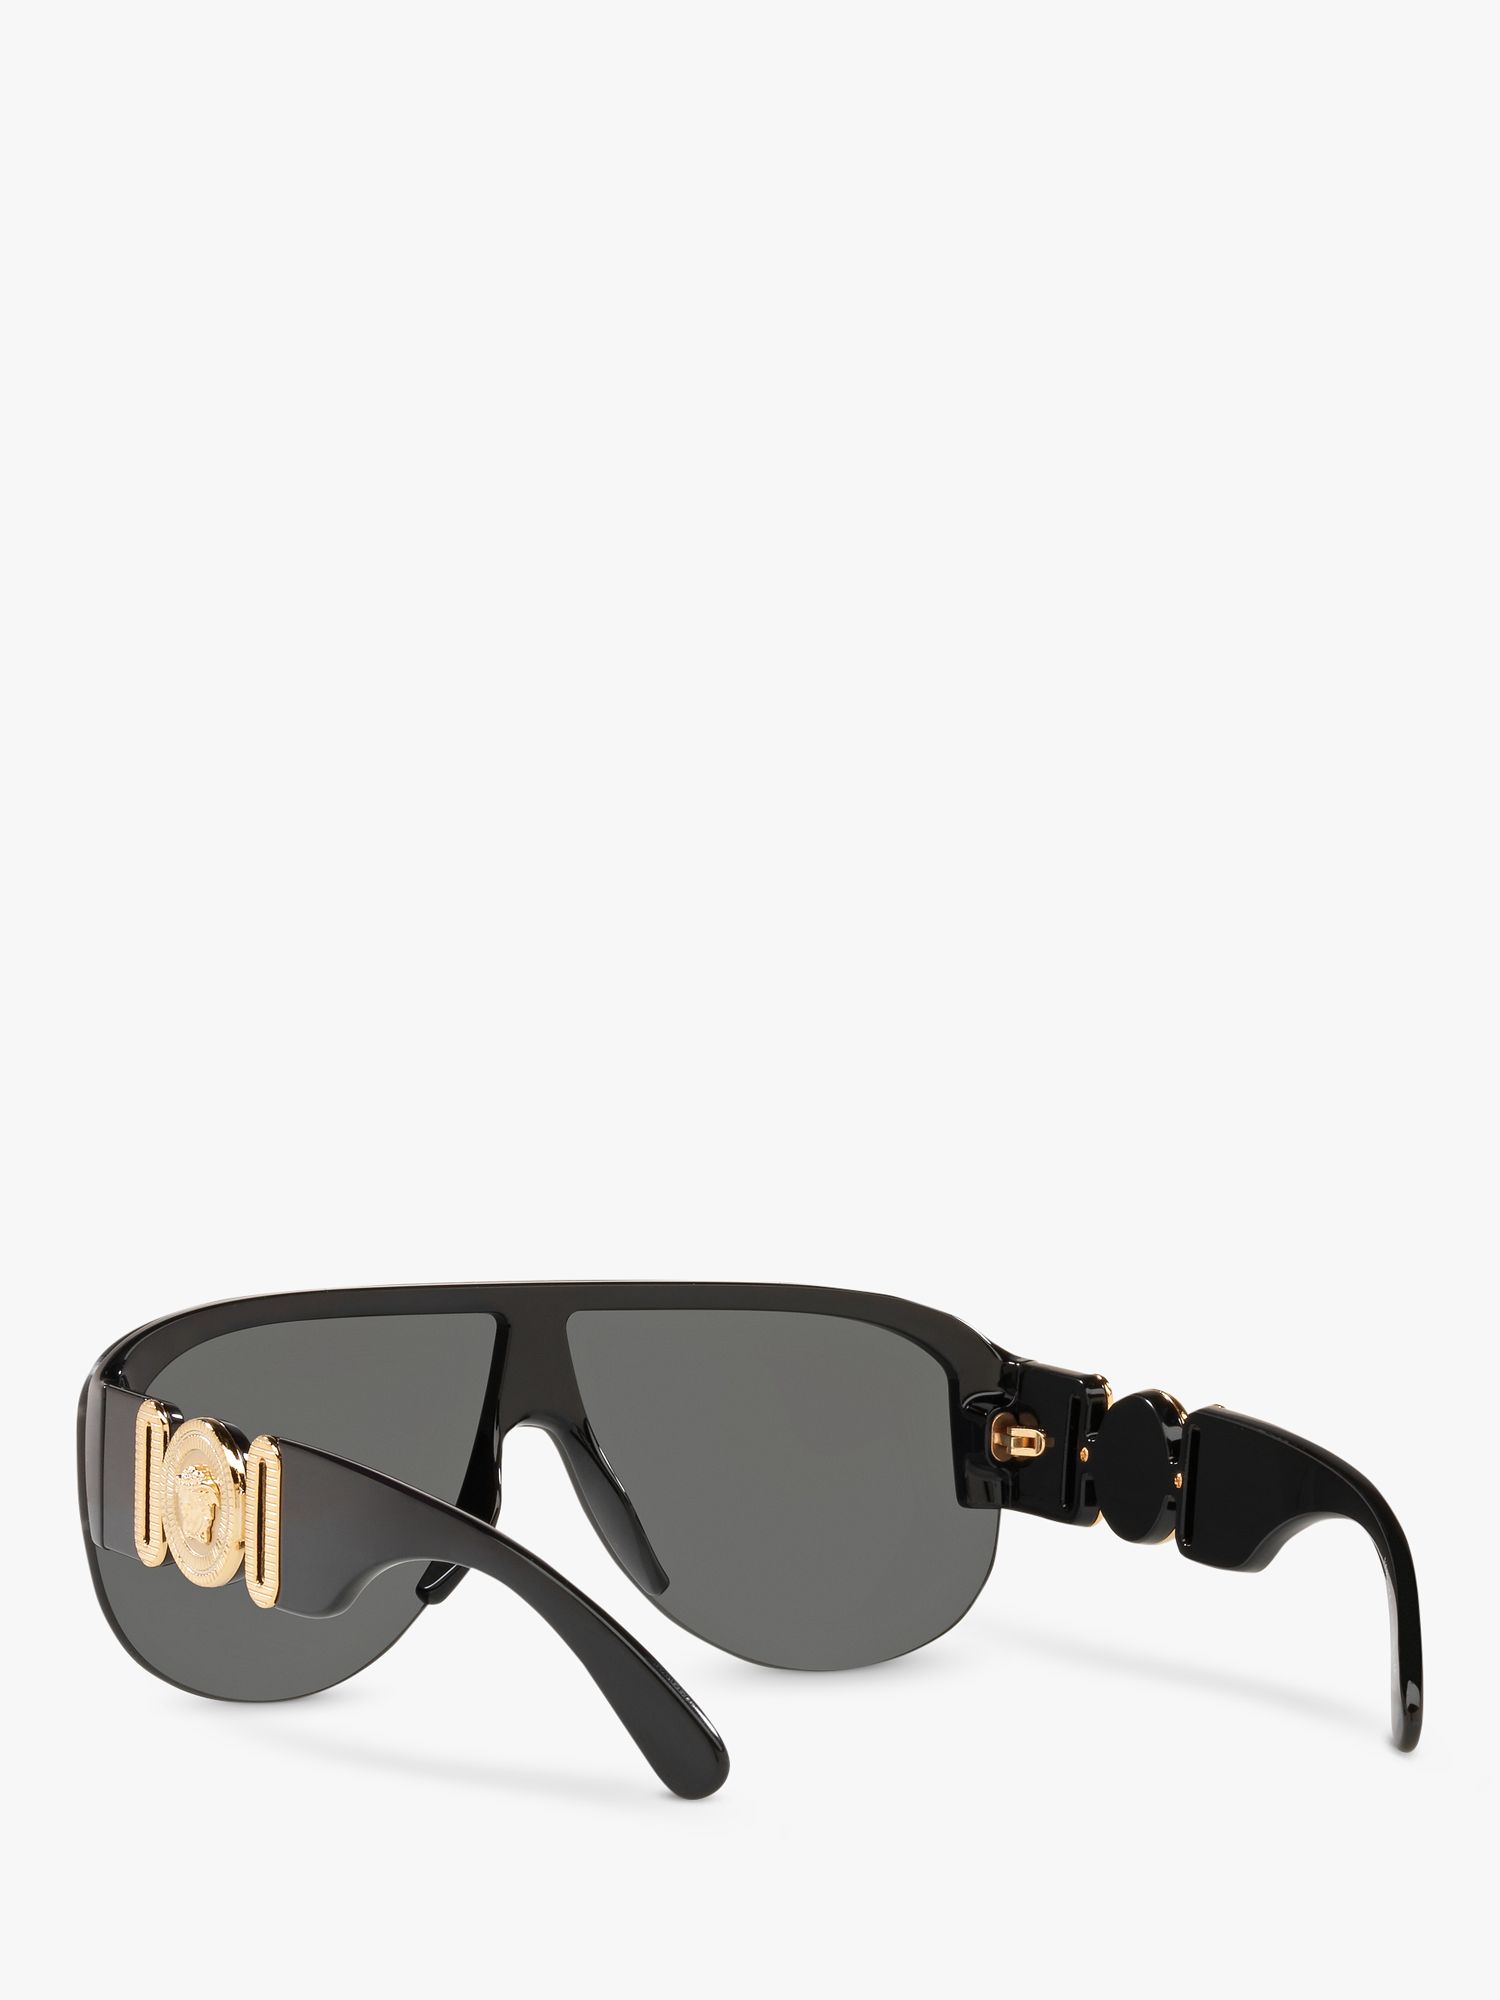 Versace VE4391 Women's Irregular Sunglasses, Black/Grey